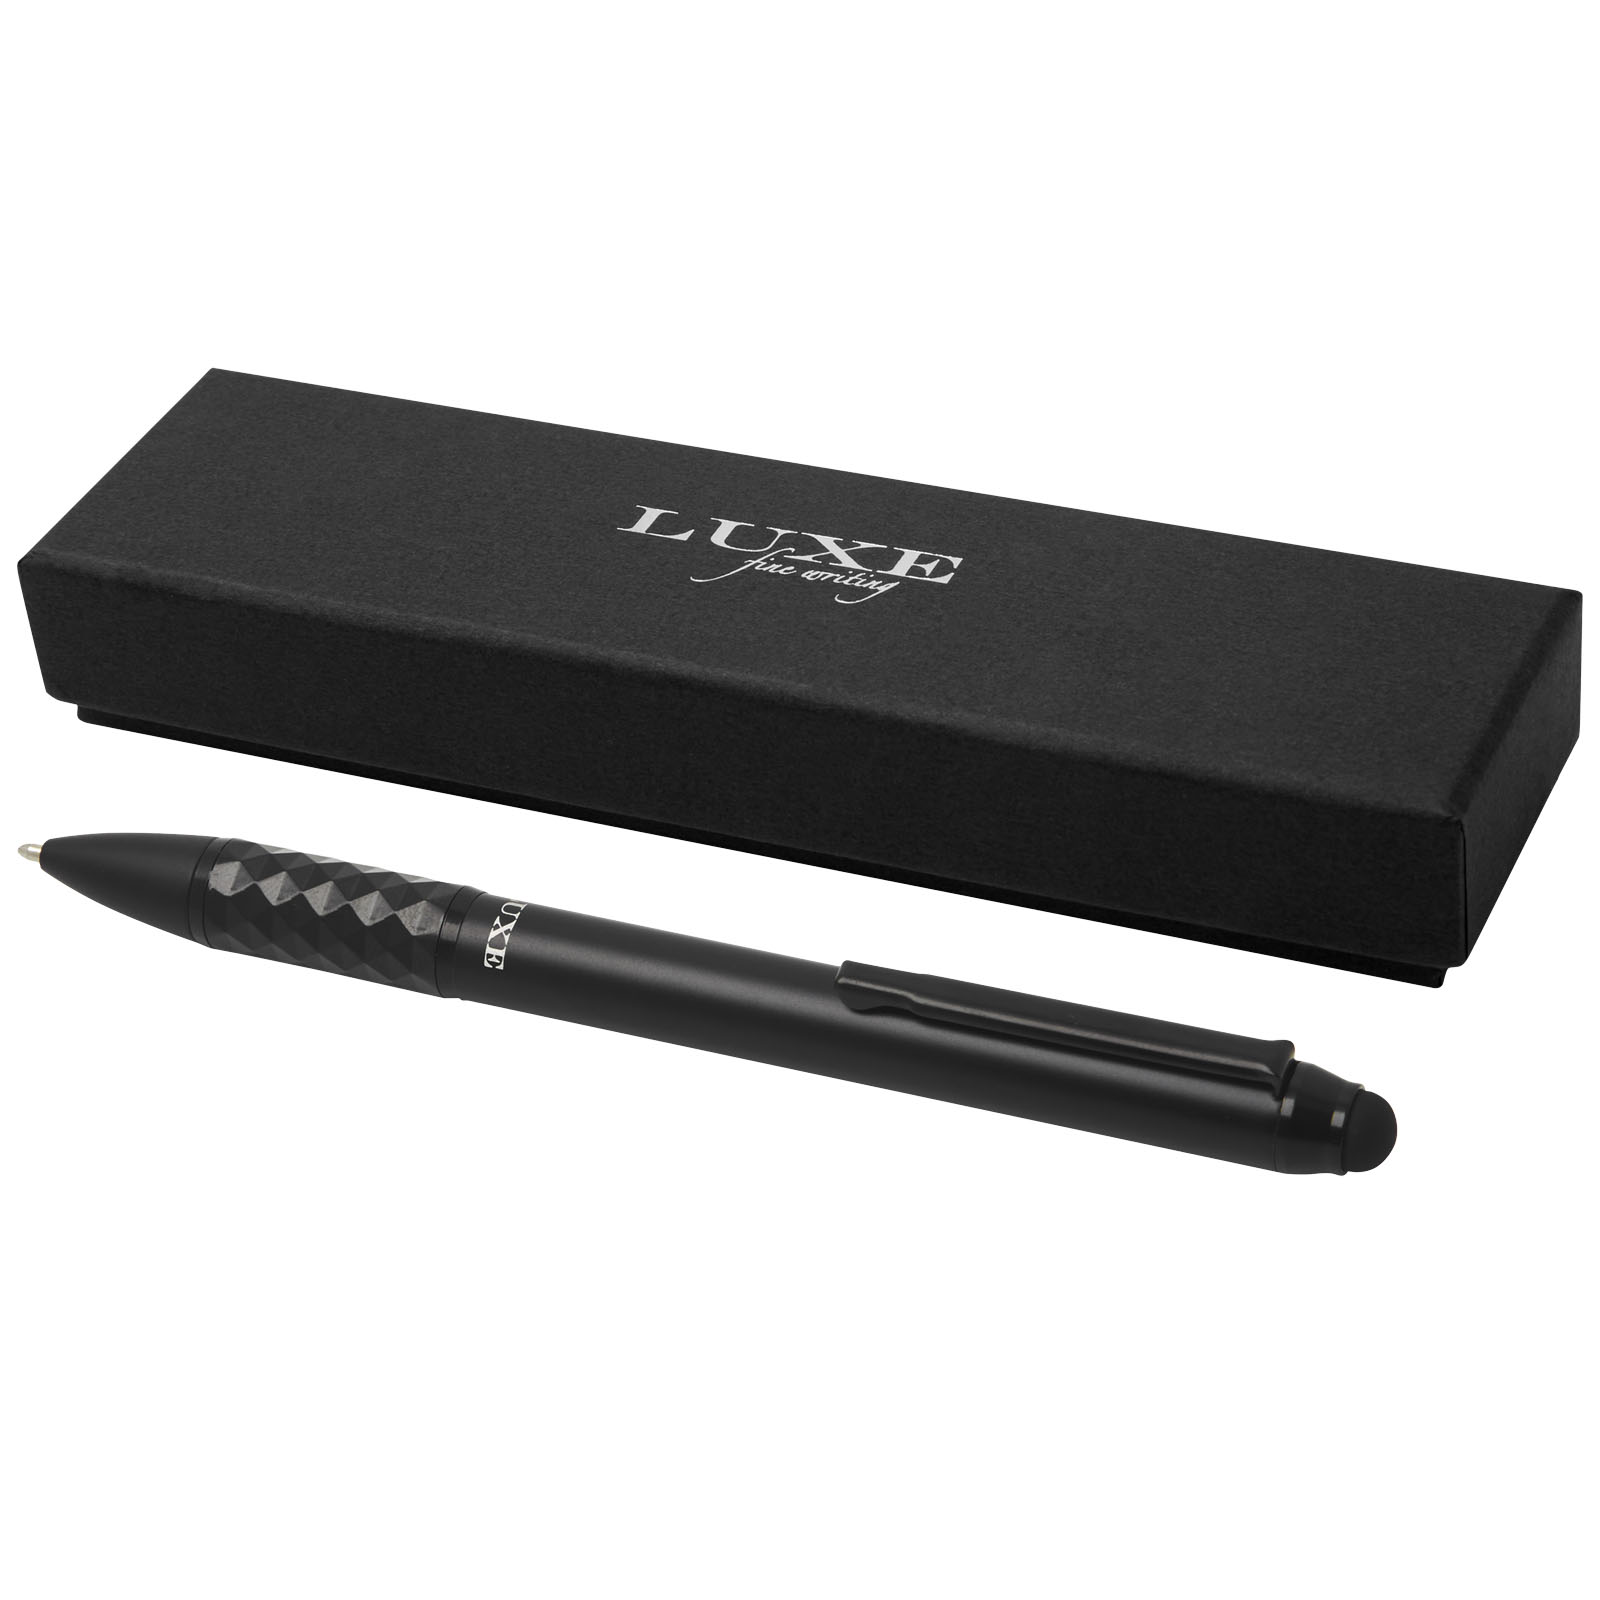 A premium ballpoint pen equipped with a stylus - Taunton